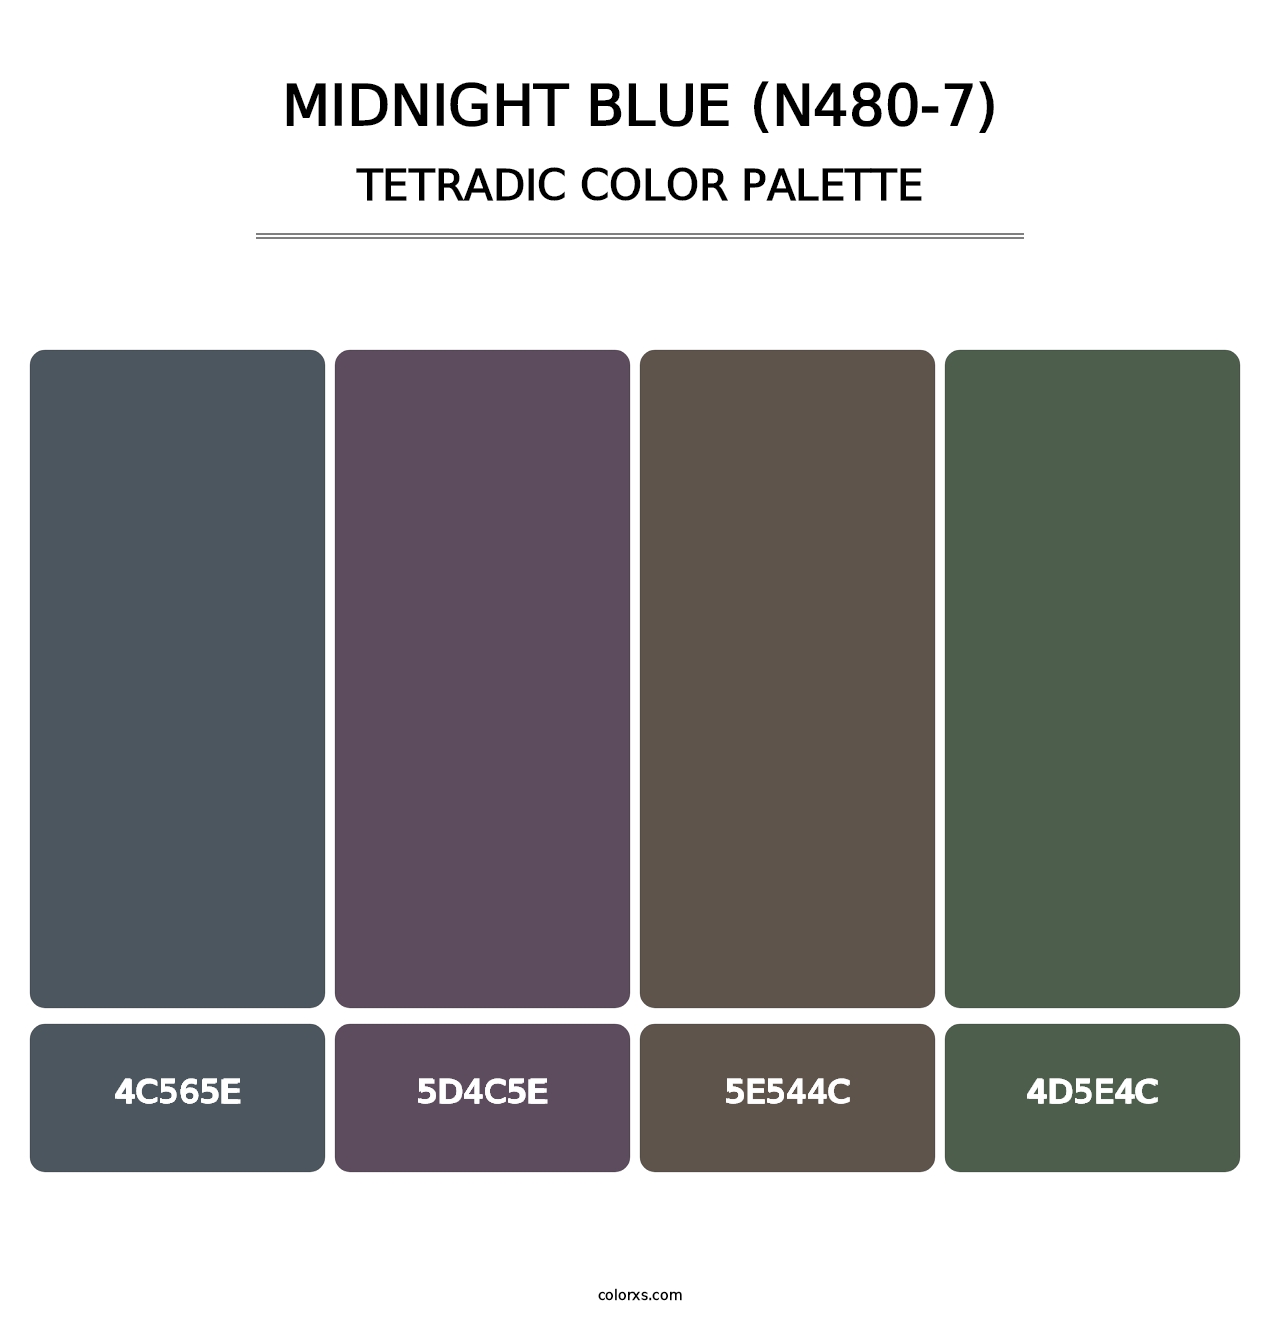 Midnight Blue (N480-7) - Tetradic Color Palette